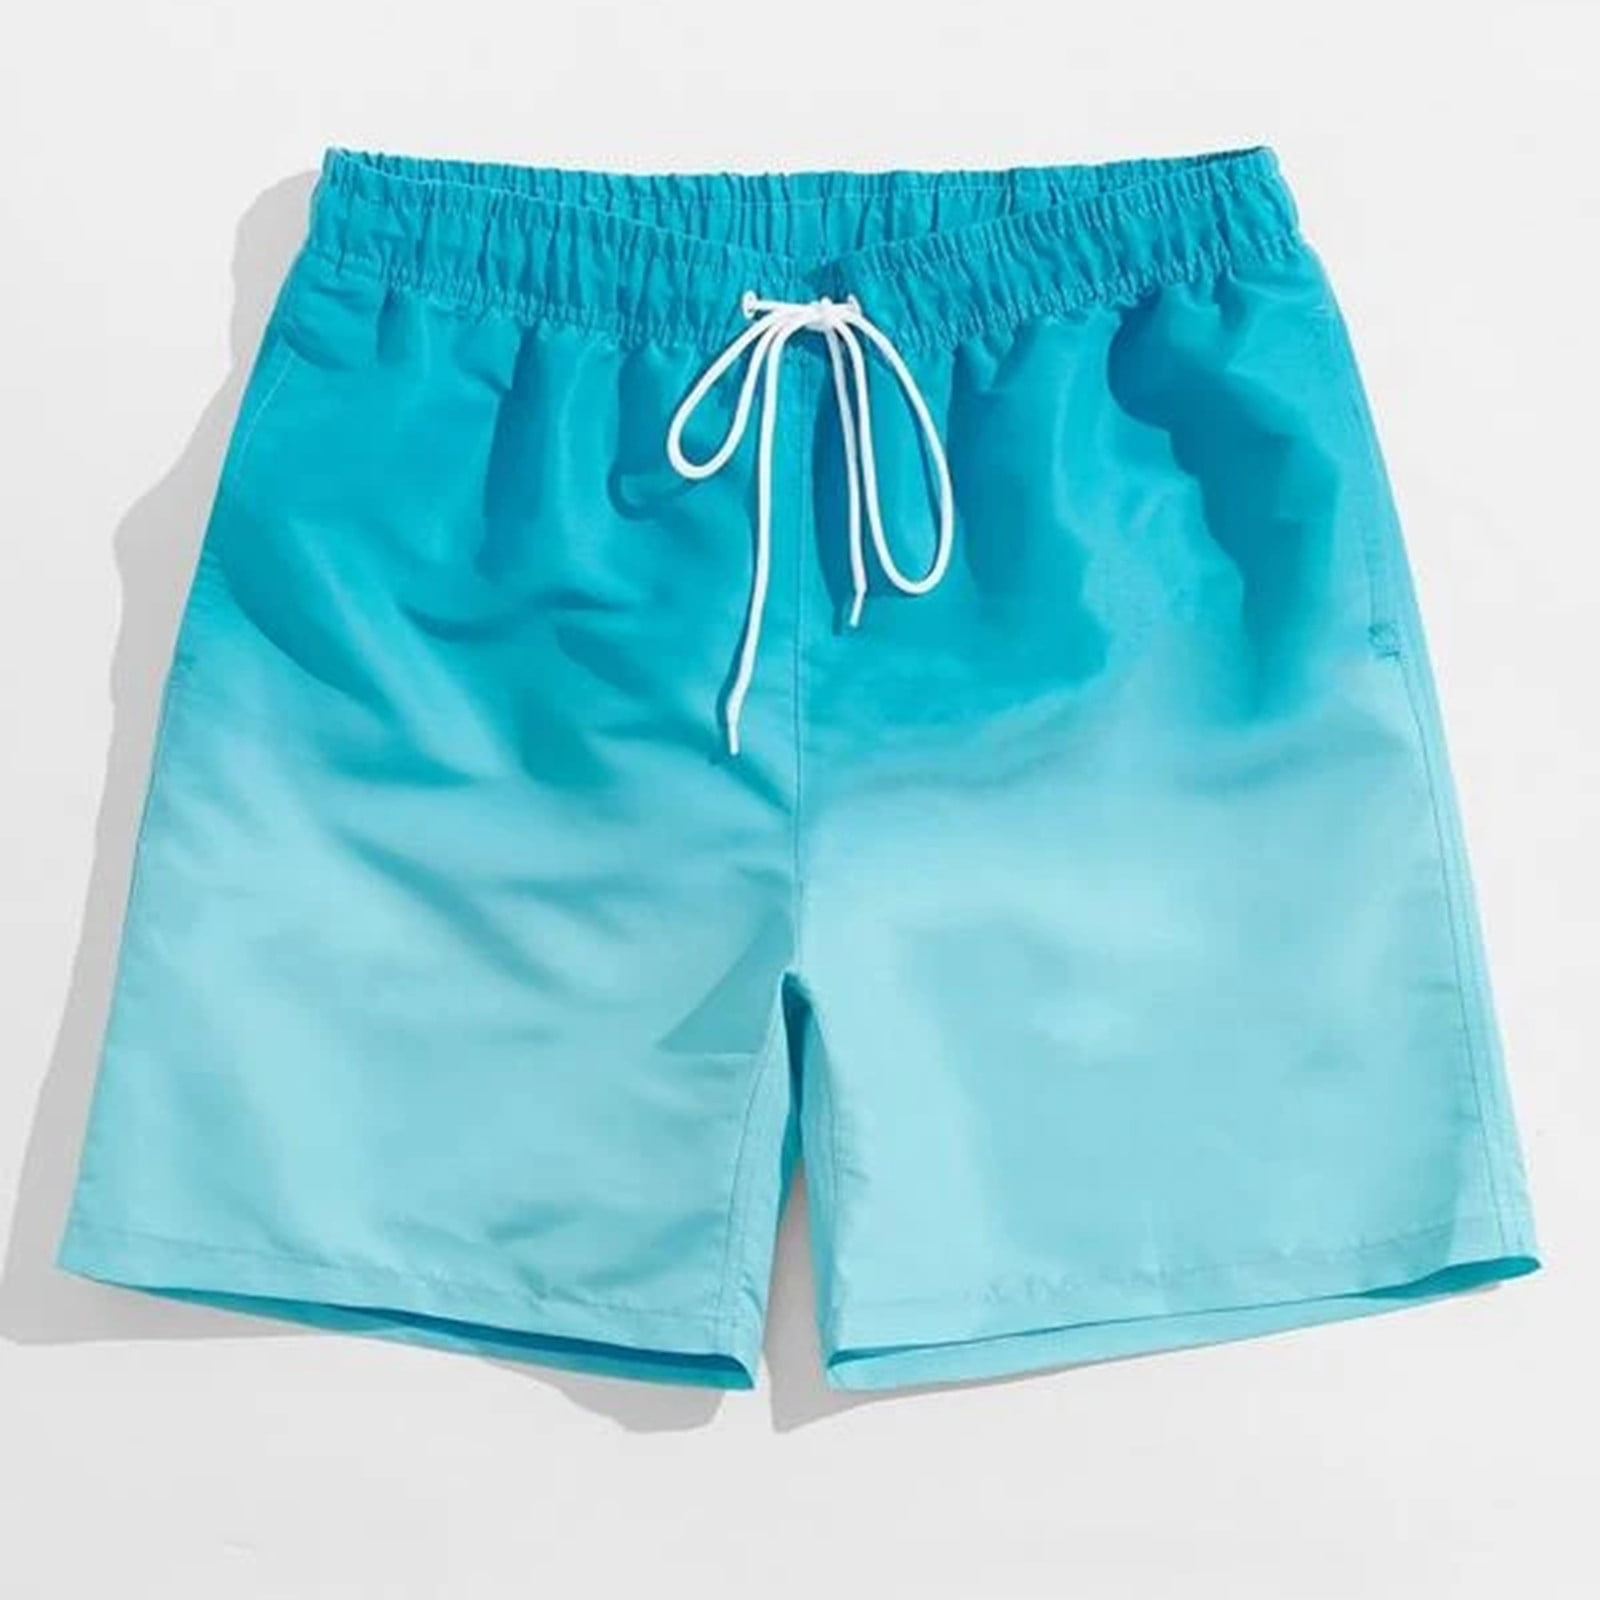 Mens Shorts Men's Fashion Casual Swim Trunks Gradient Color Seaside ...